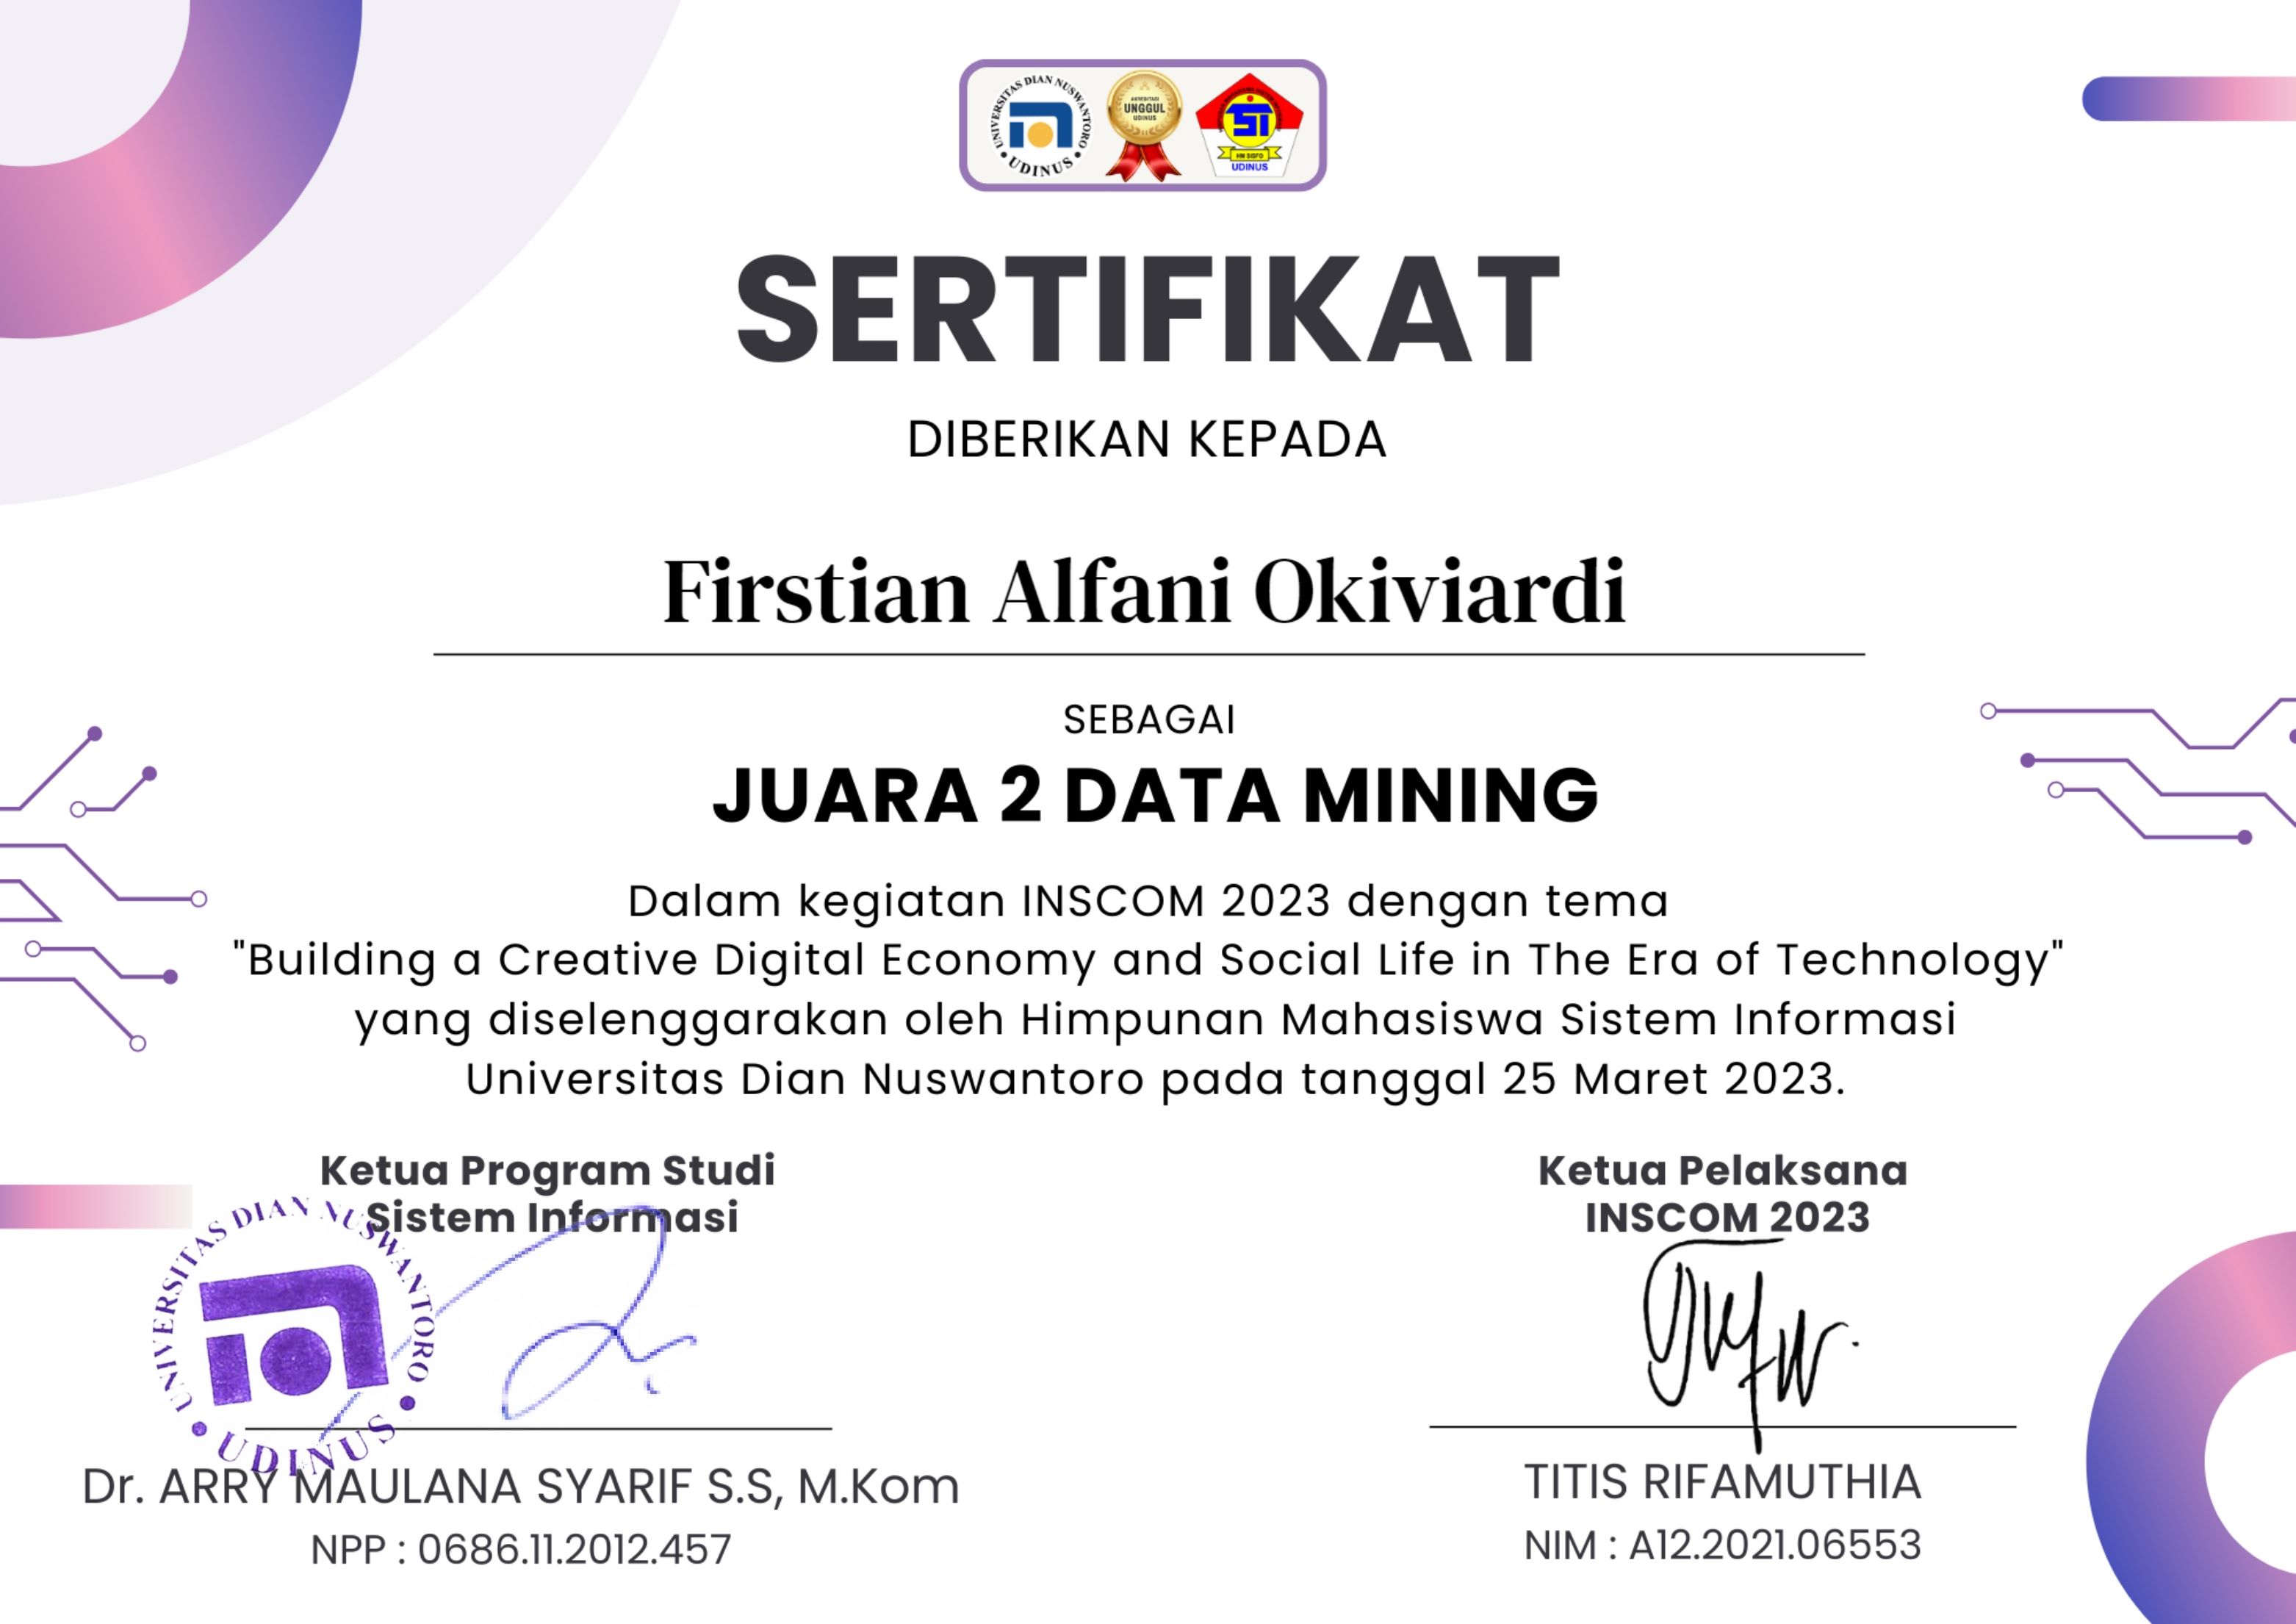 Sertifikat Juara 2 Data Mining